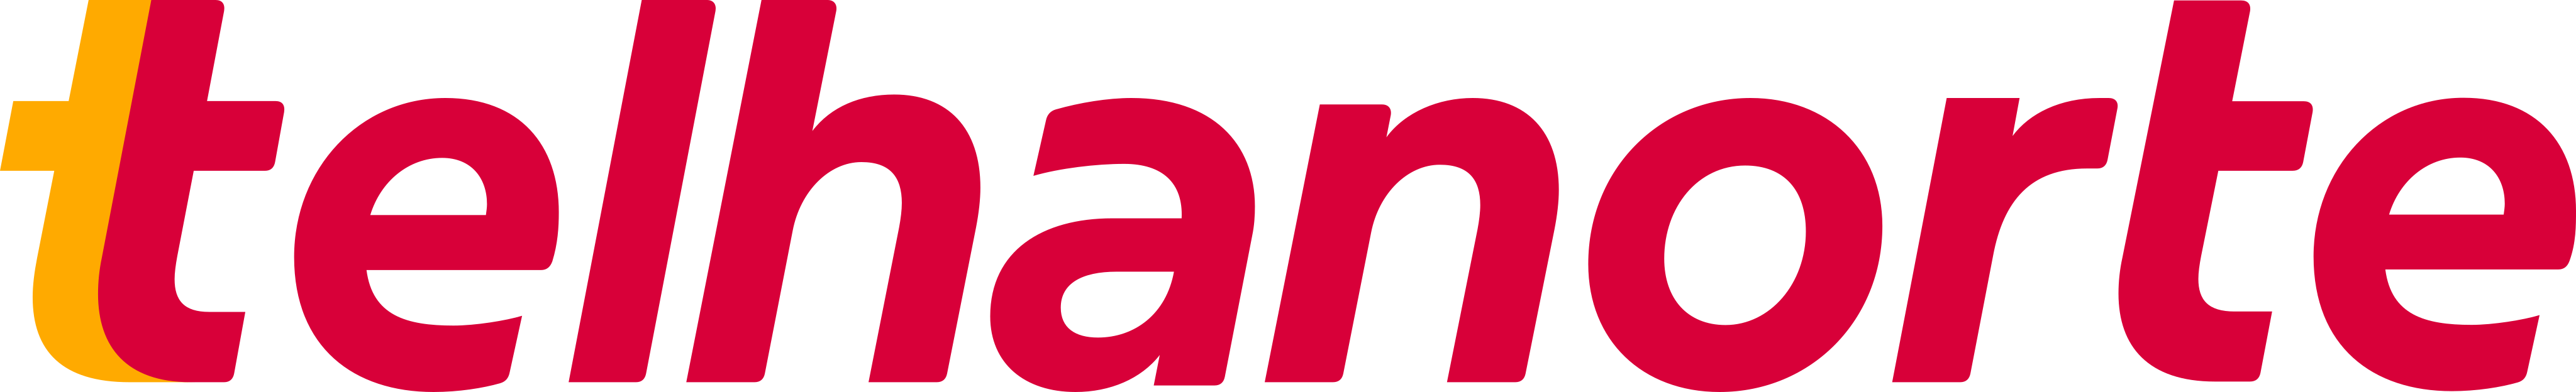 Telhanorte Logo.